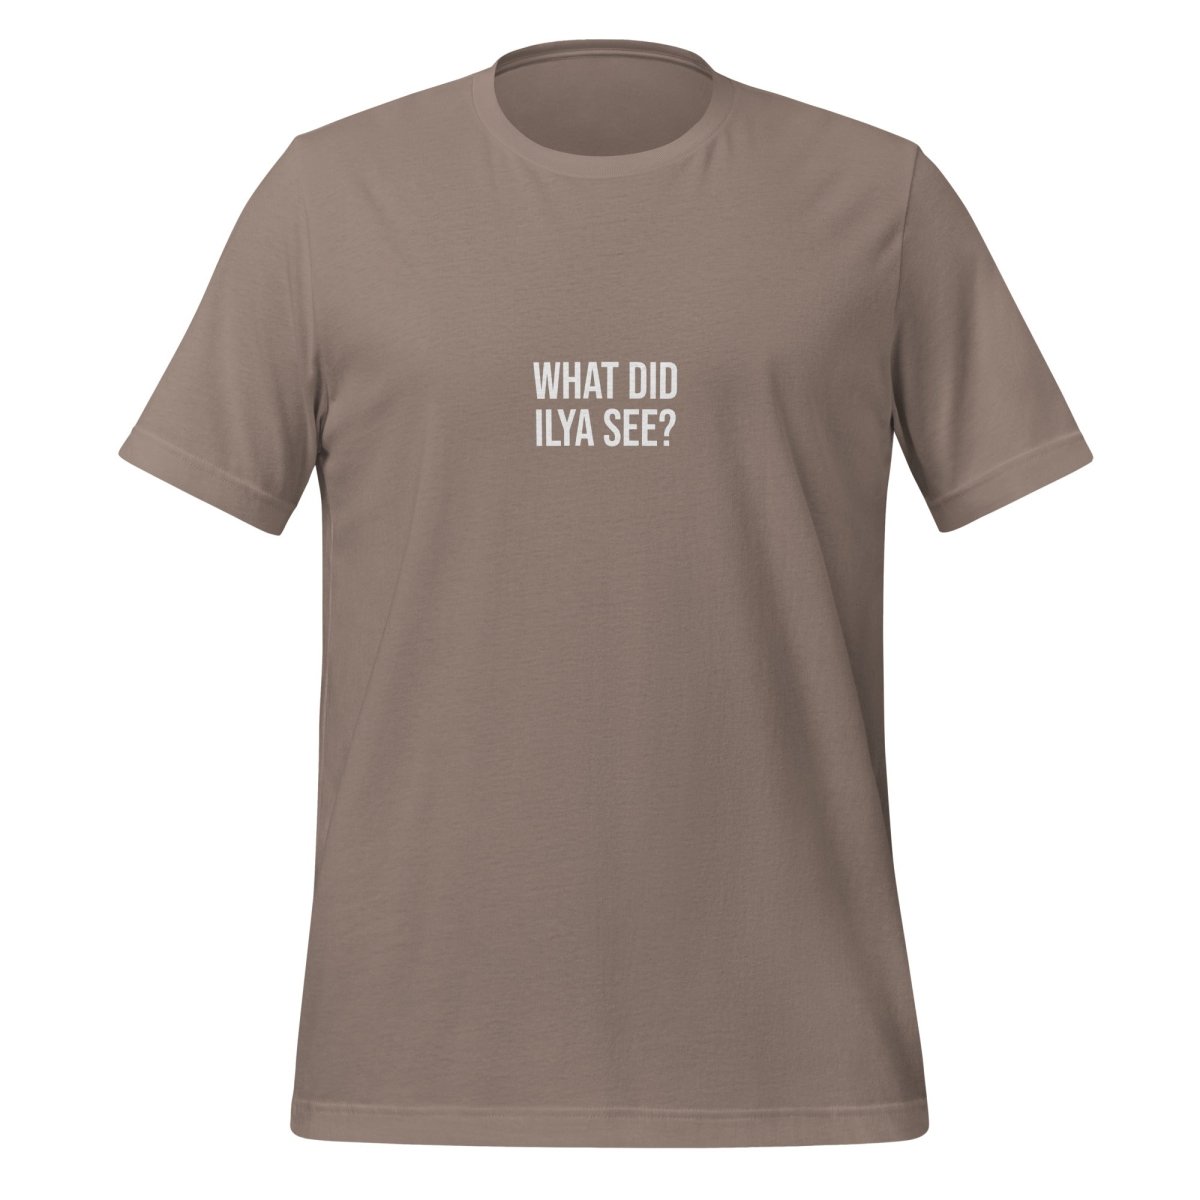 WHAT DID ILYA SEE? T - Shirt 4 (unisex) - Pebble - AI Store